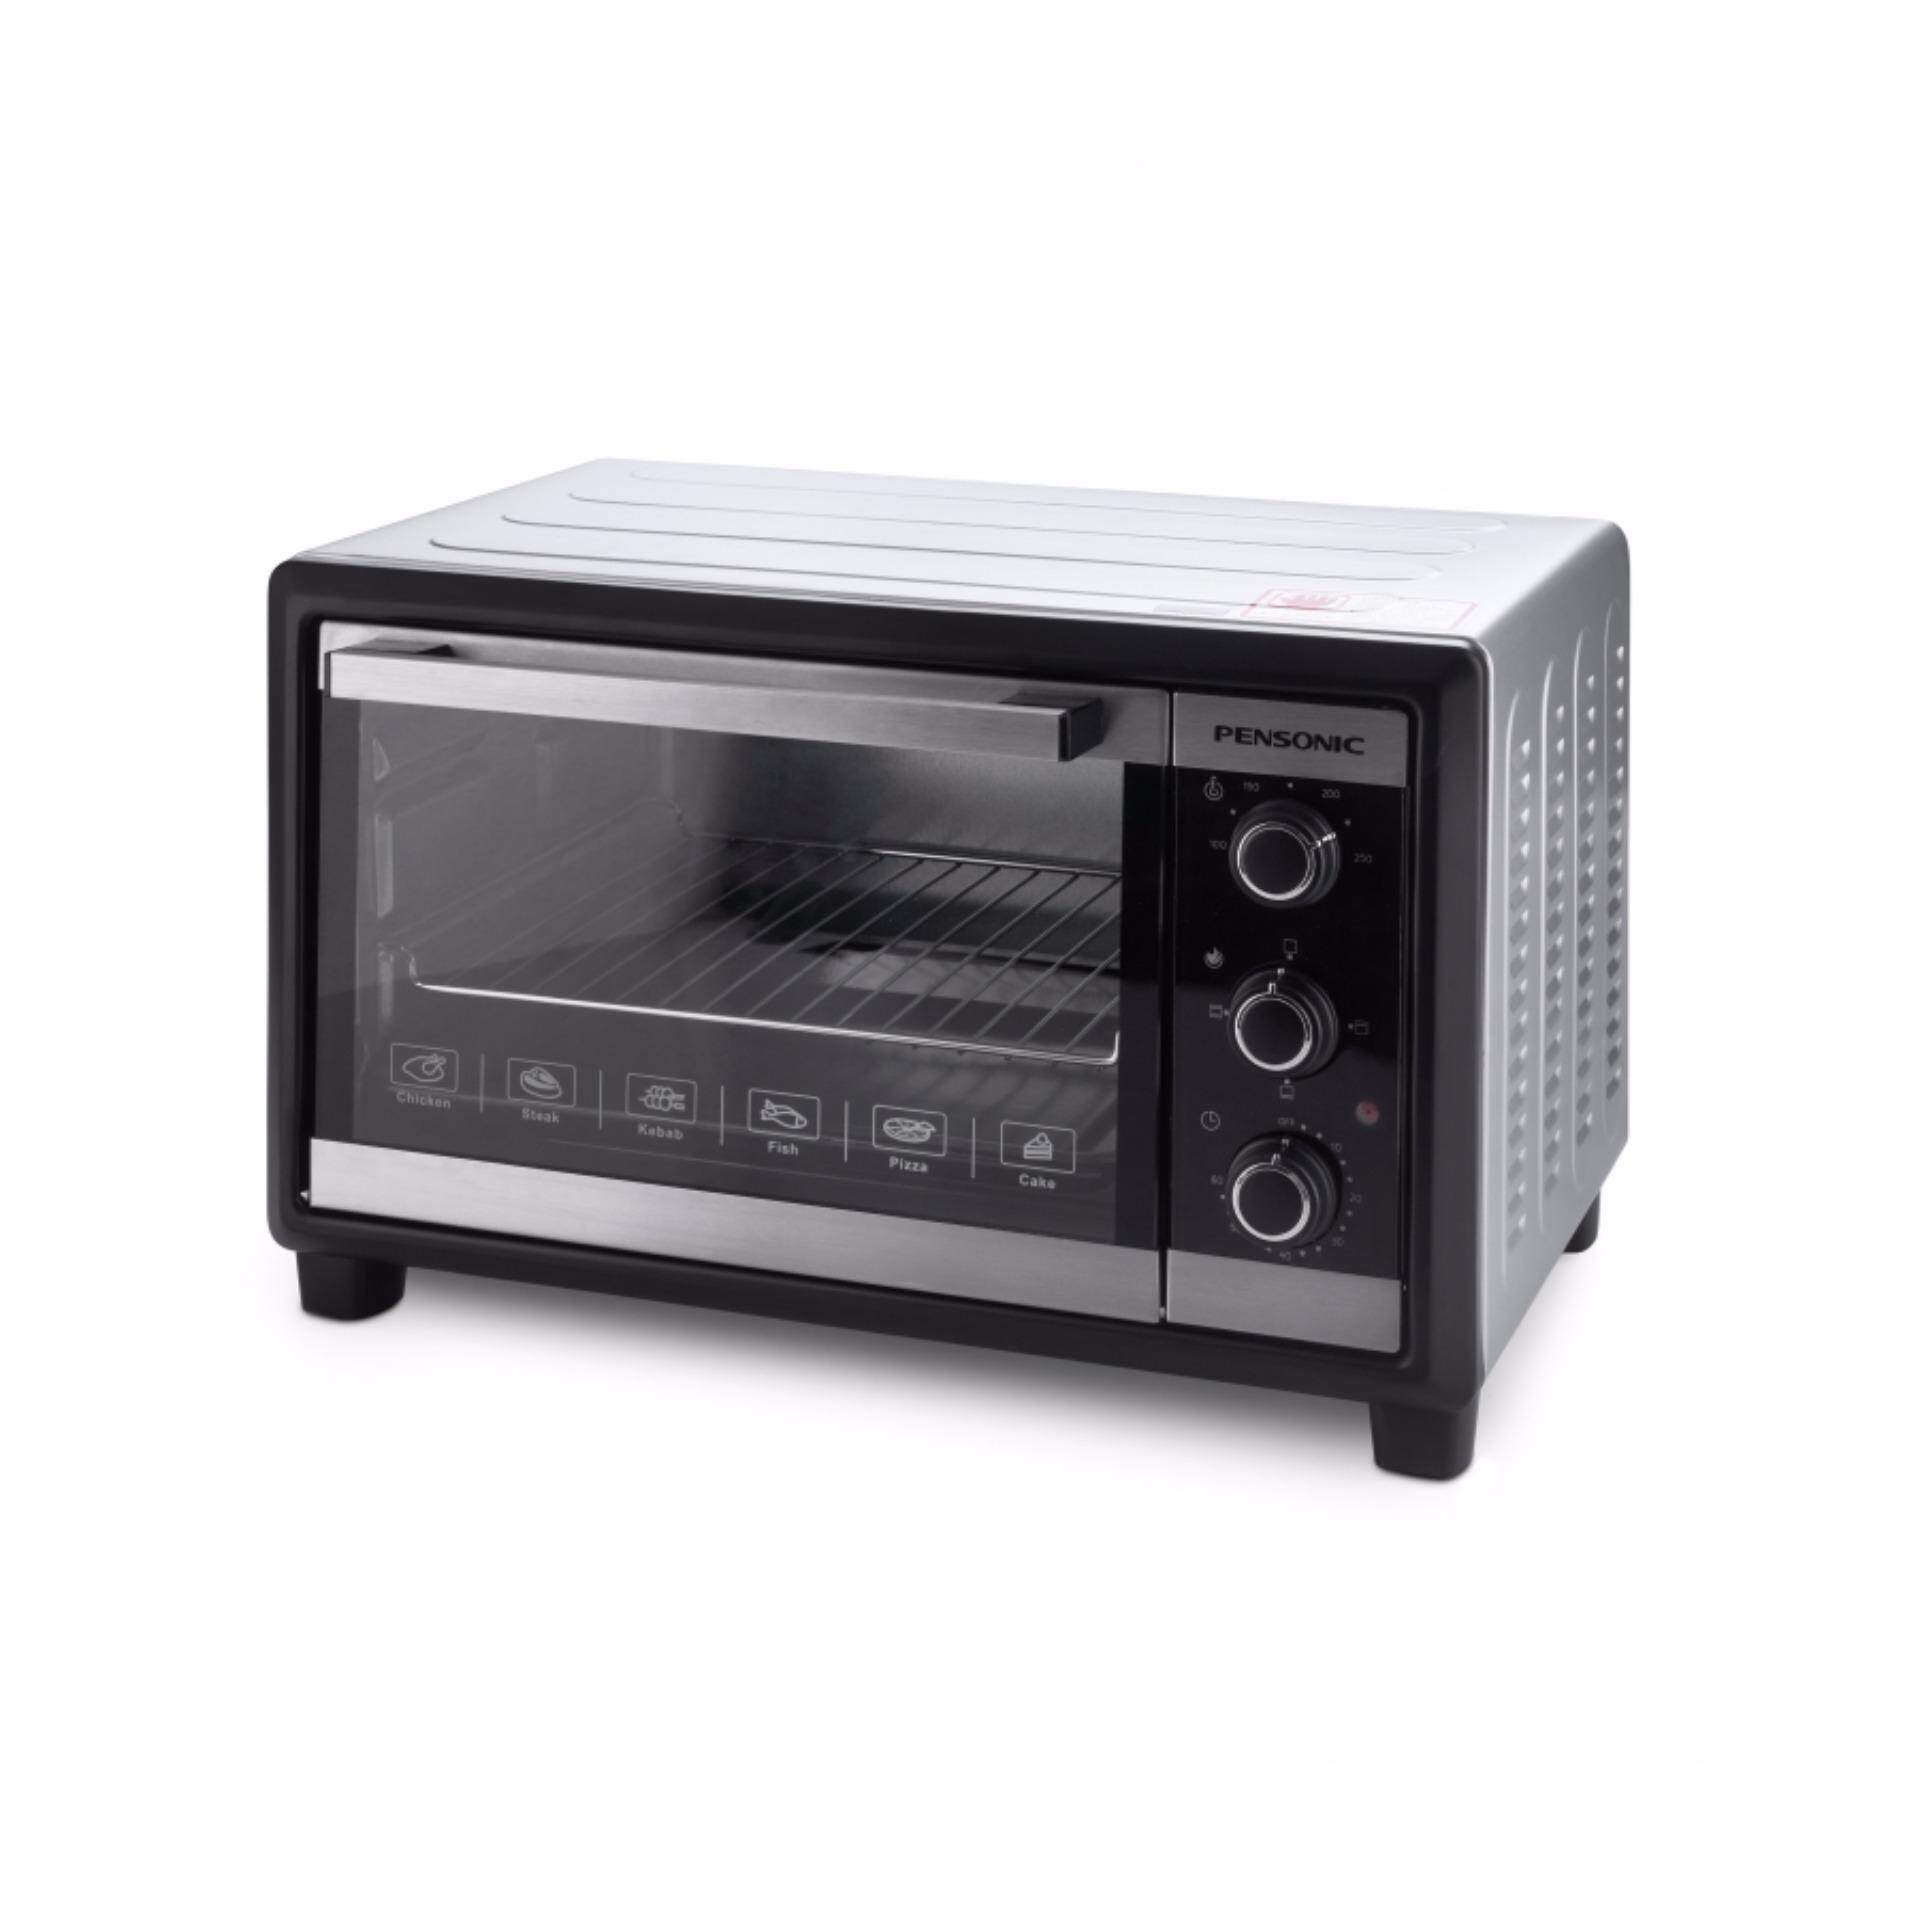 Sharp Microwave Oven R202zs Harga | Bruin Blog